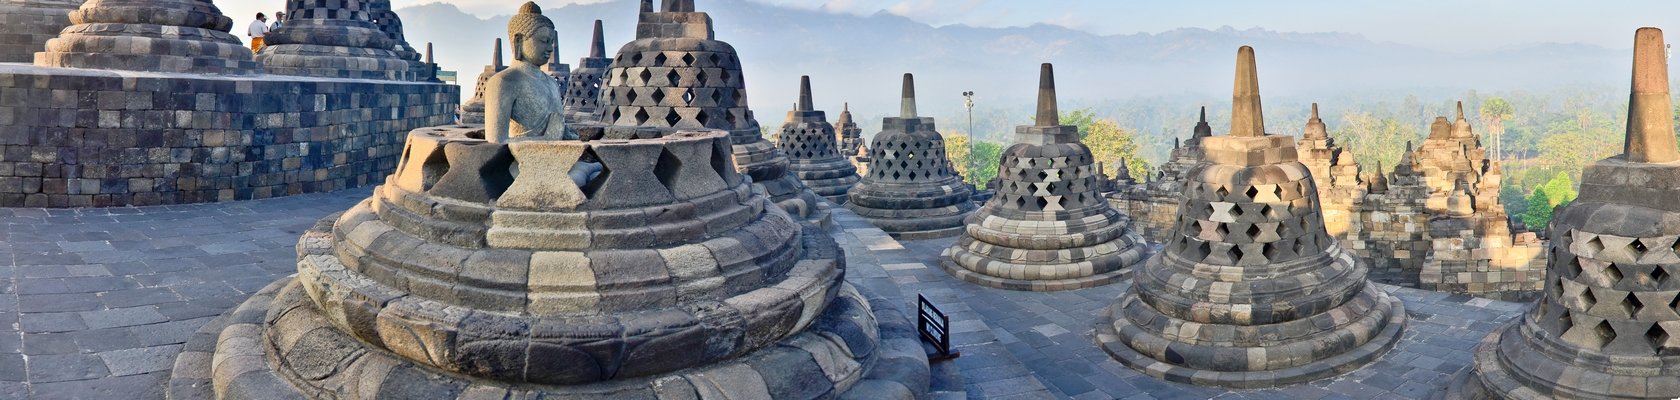 Bezoek aan de beroemde Borobudur tempels, Jogjakarta